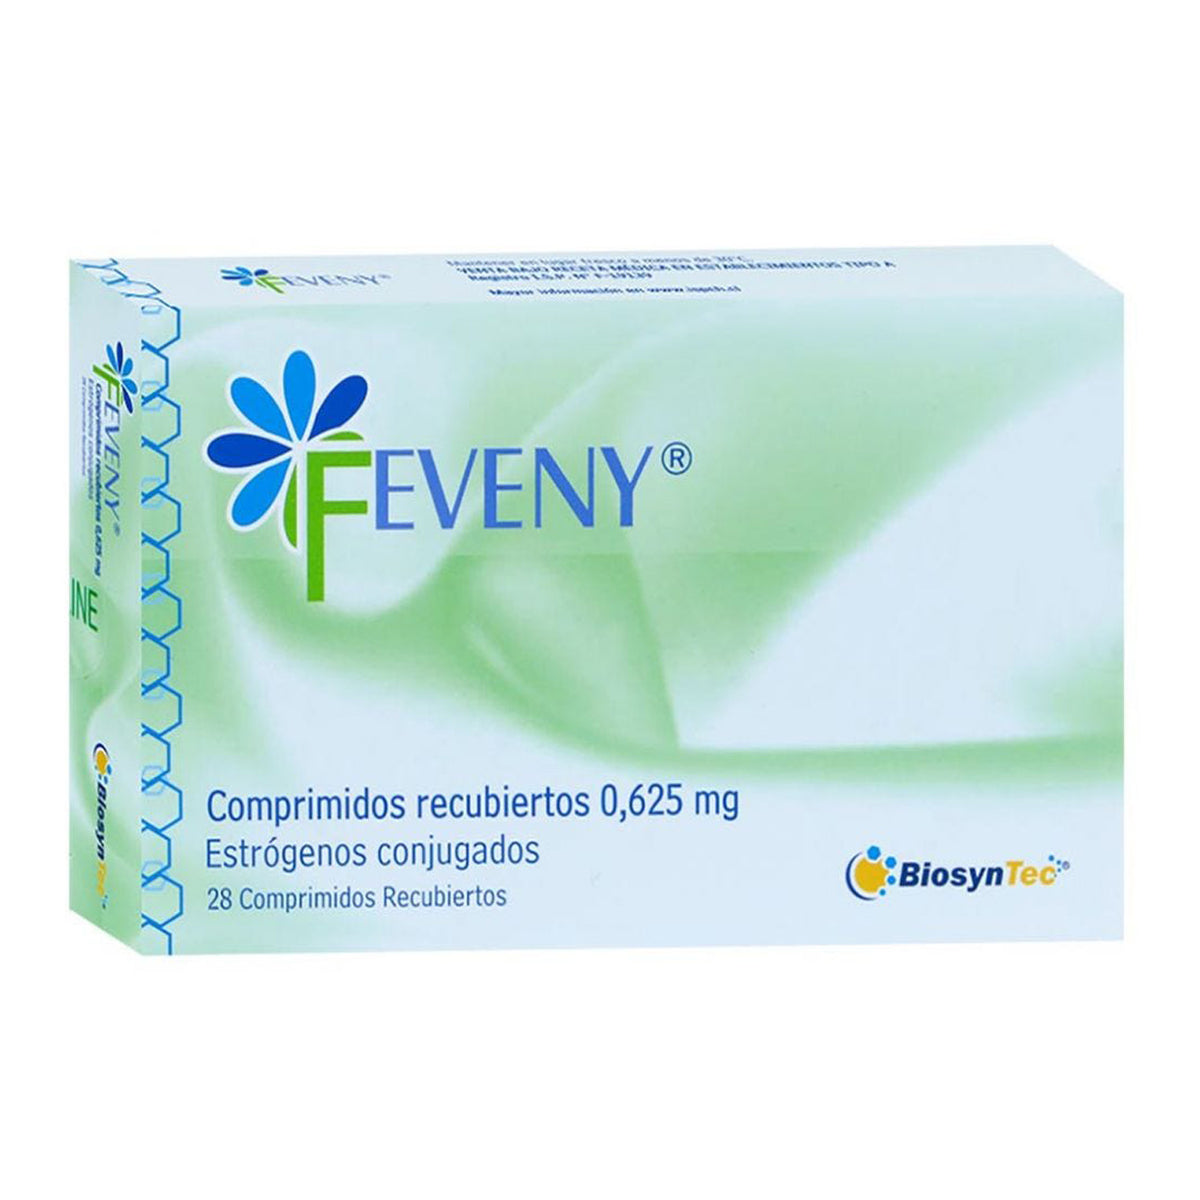 Feveny Comprimidos Recubiertos 0,625mg